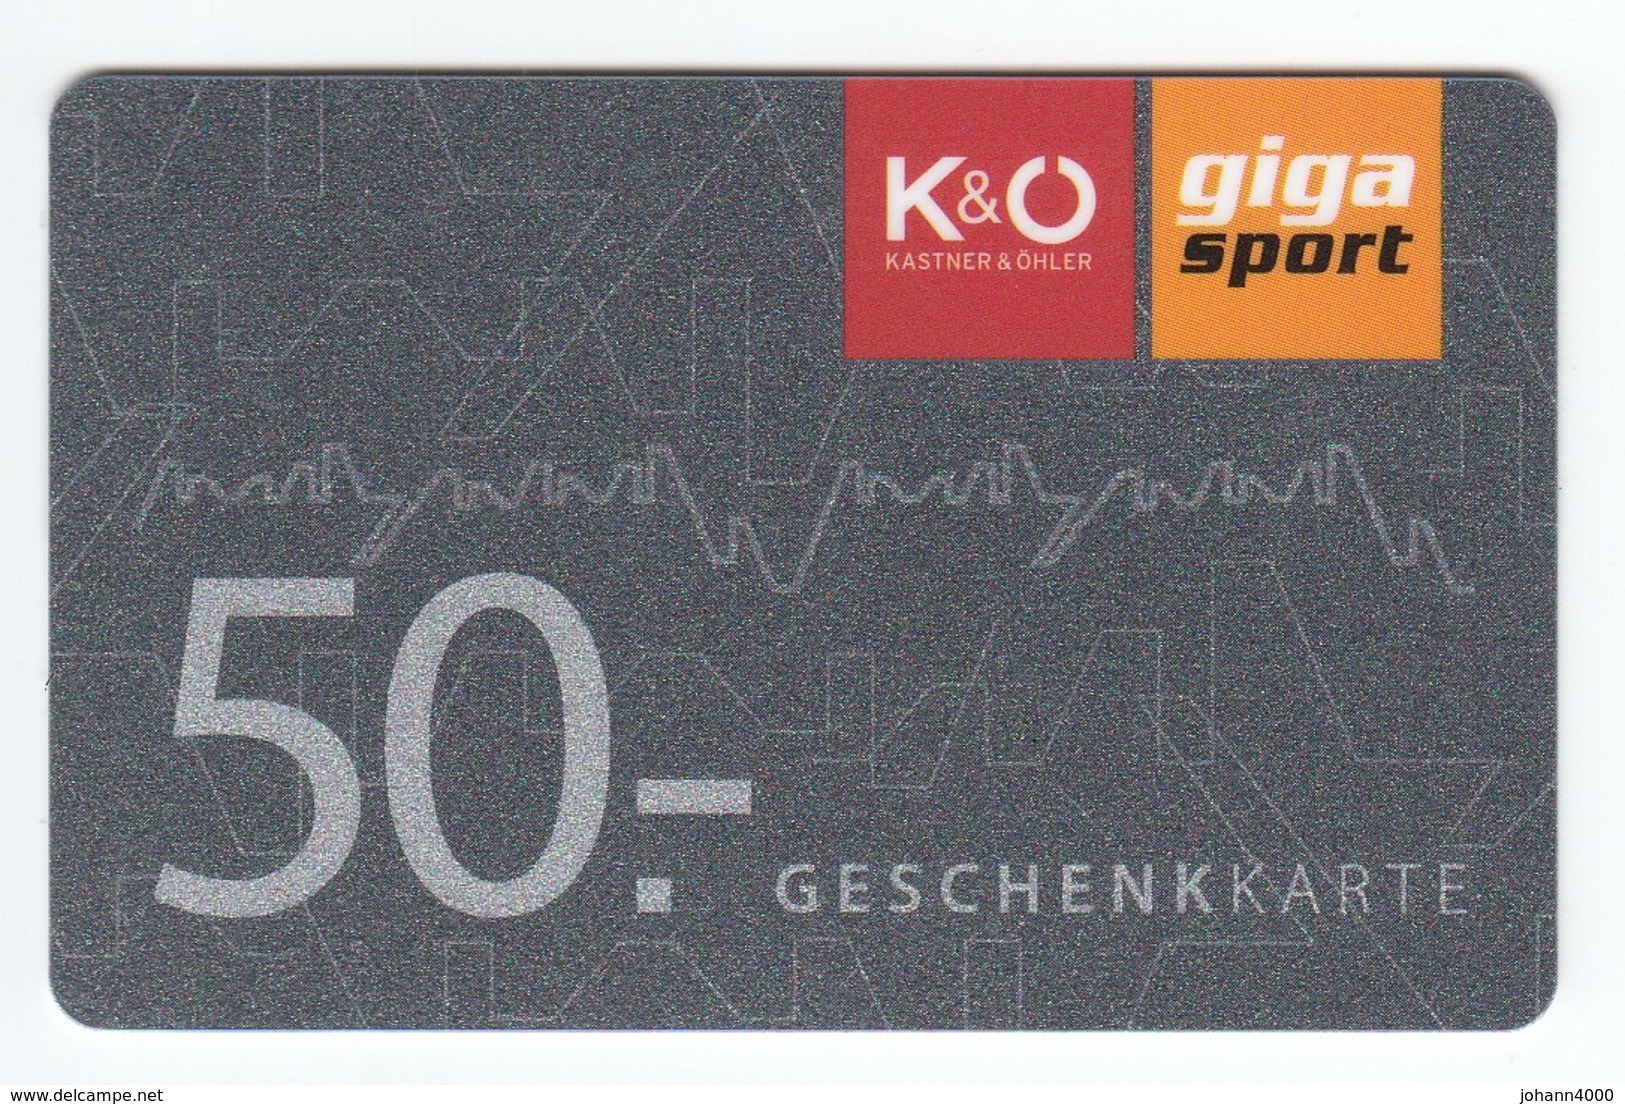 Geschenkkarte Giga Sport  Gift - Gift Cards